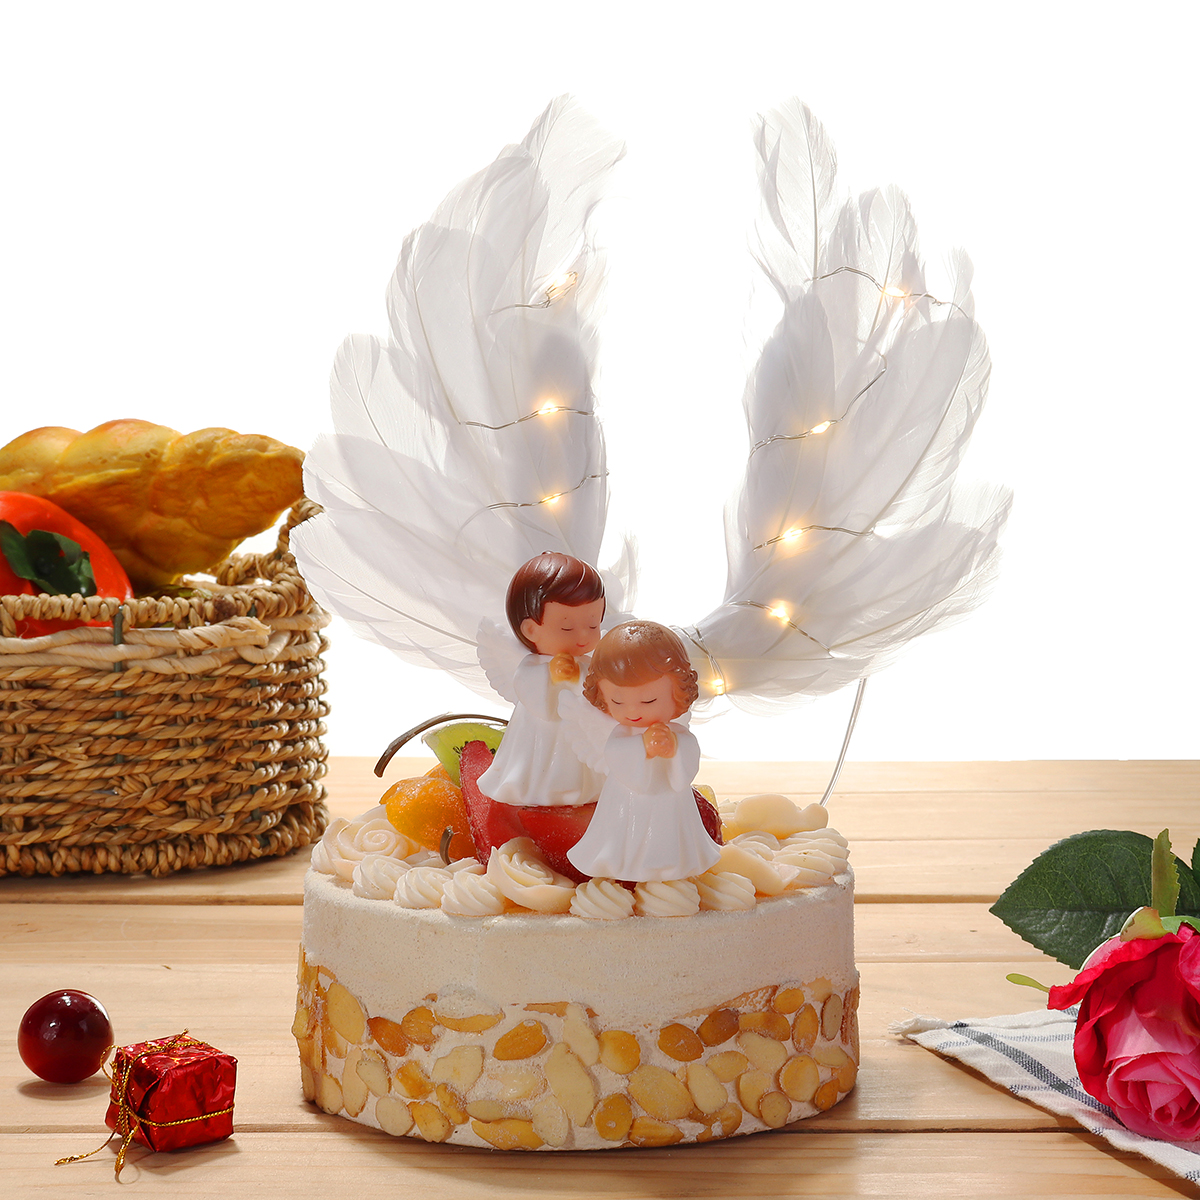 

Angels DIY Cake Topper Decor Birthday Valentine's Day Party Romantic Mini Cute Decorations